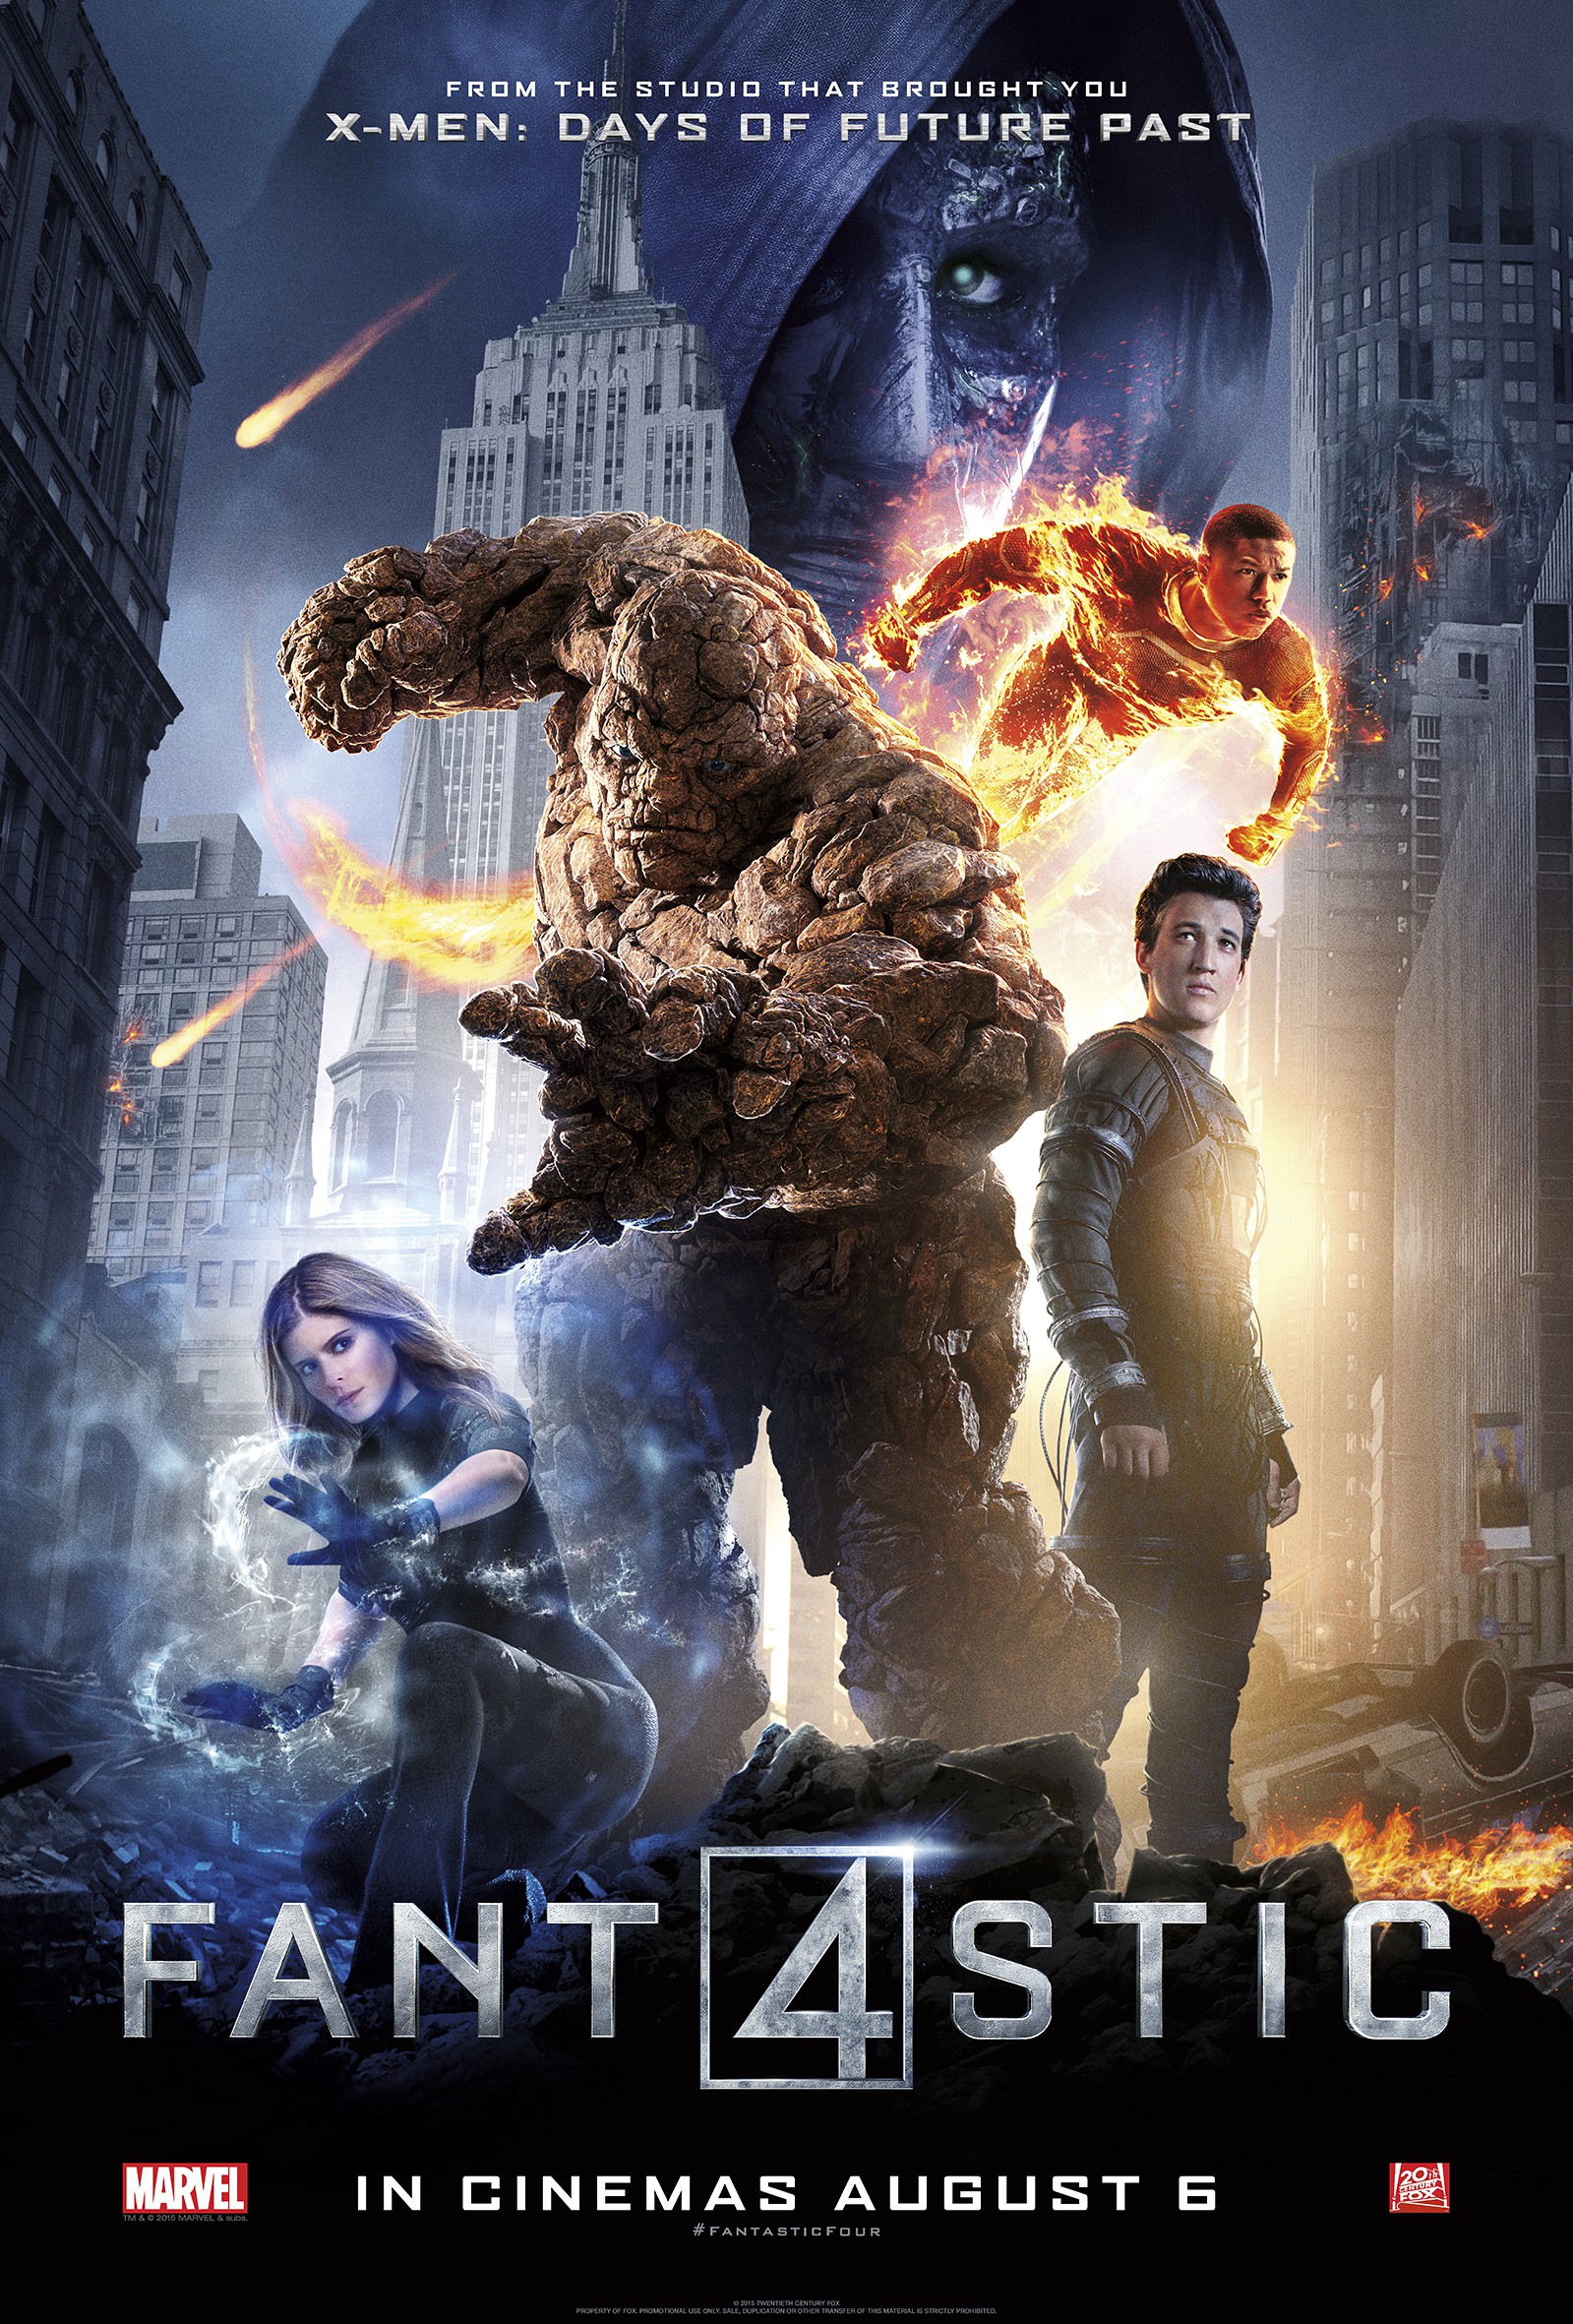 Fantastic Four (2015) HD wallpapers, Desktop wallpaper - most viewed